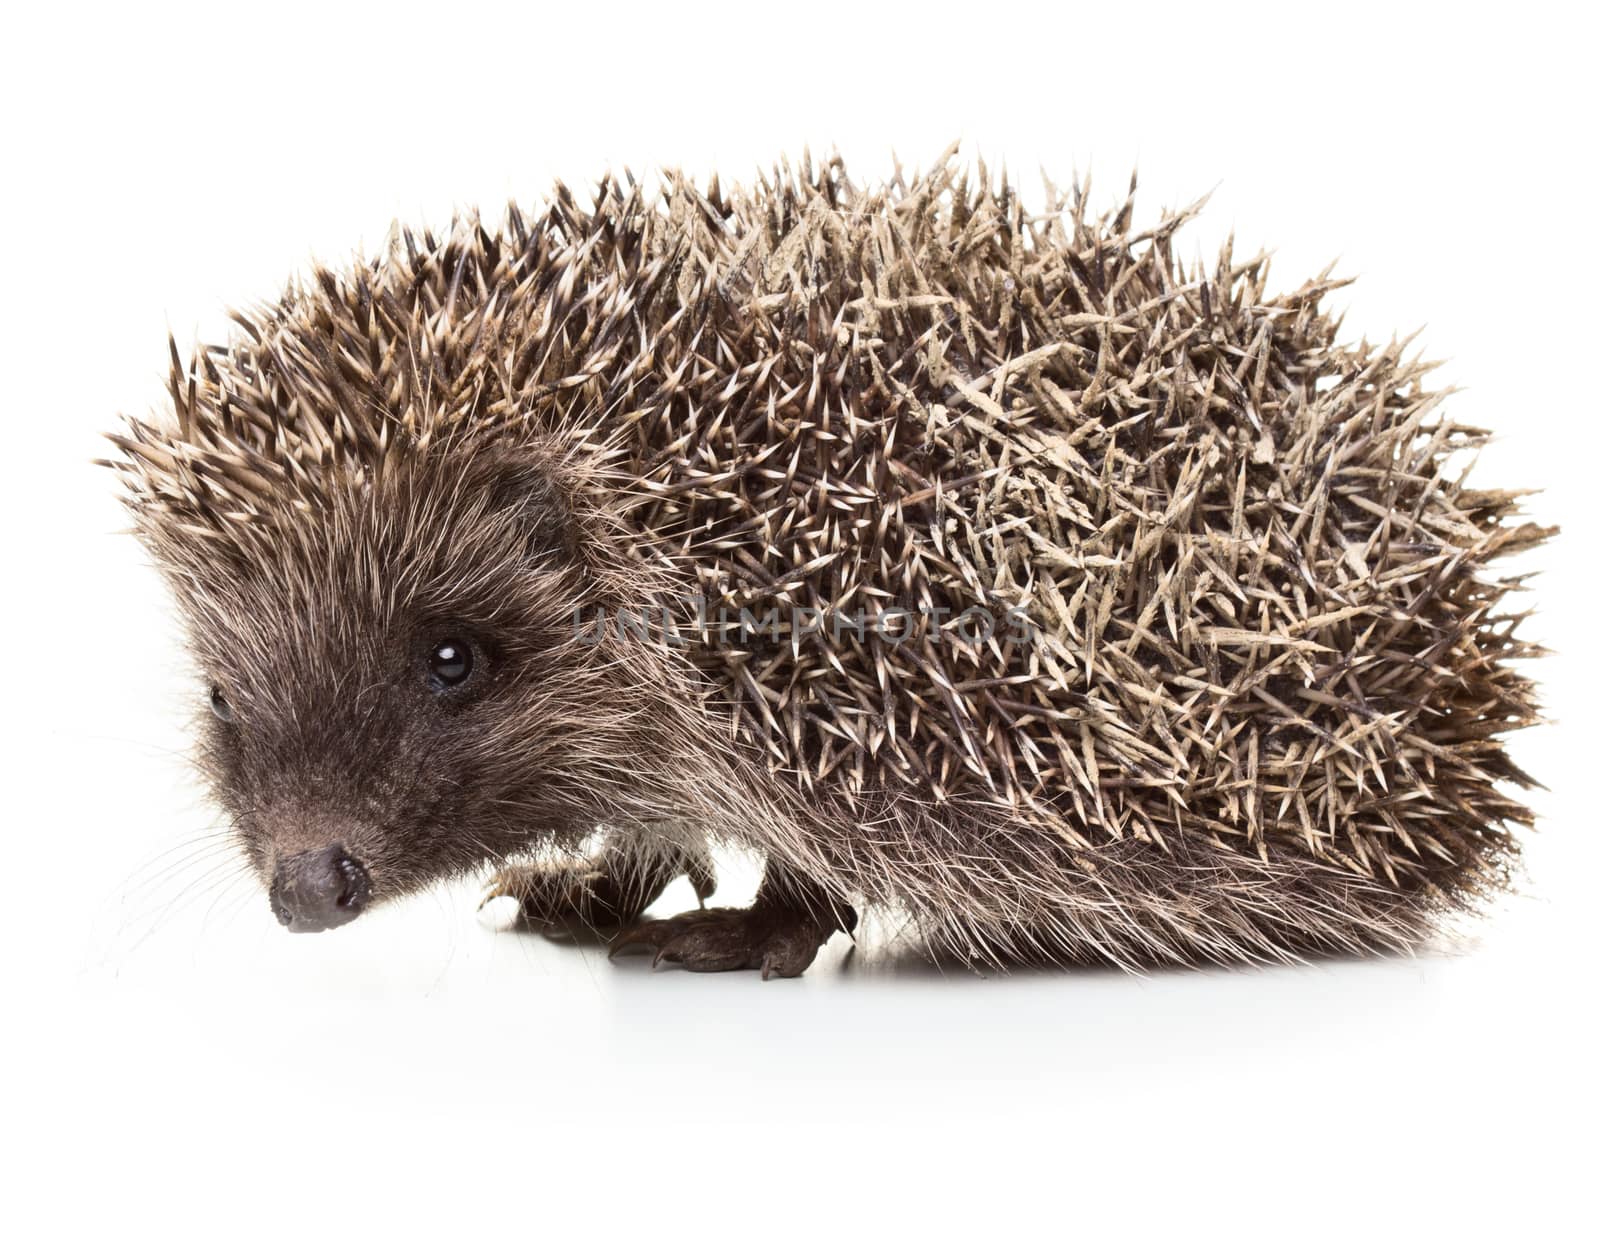 Hedgehog by Valengilda